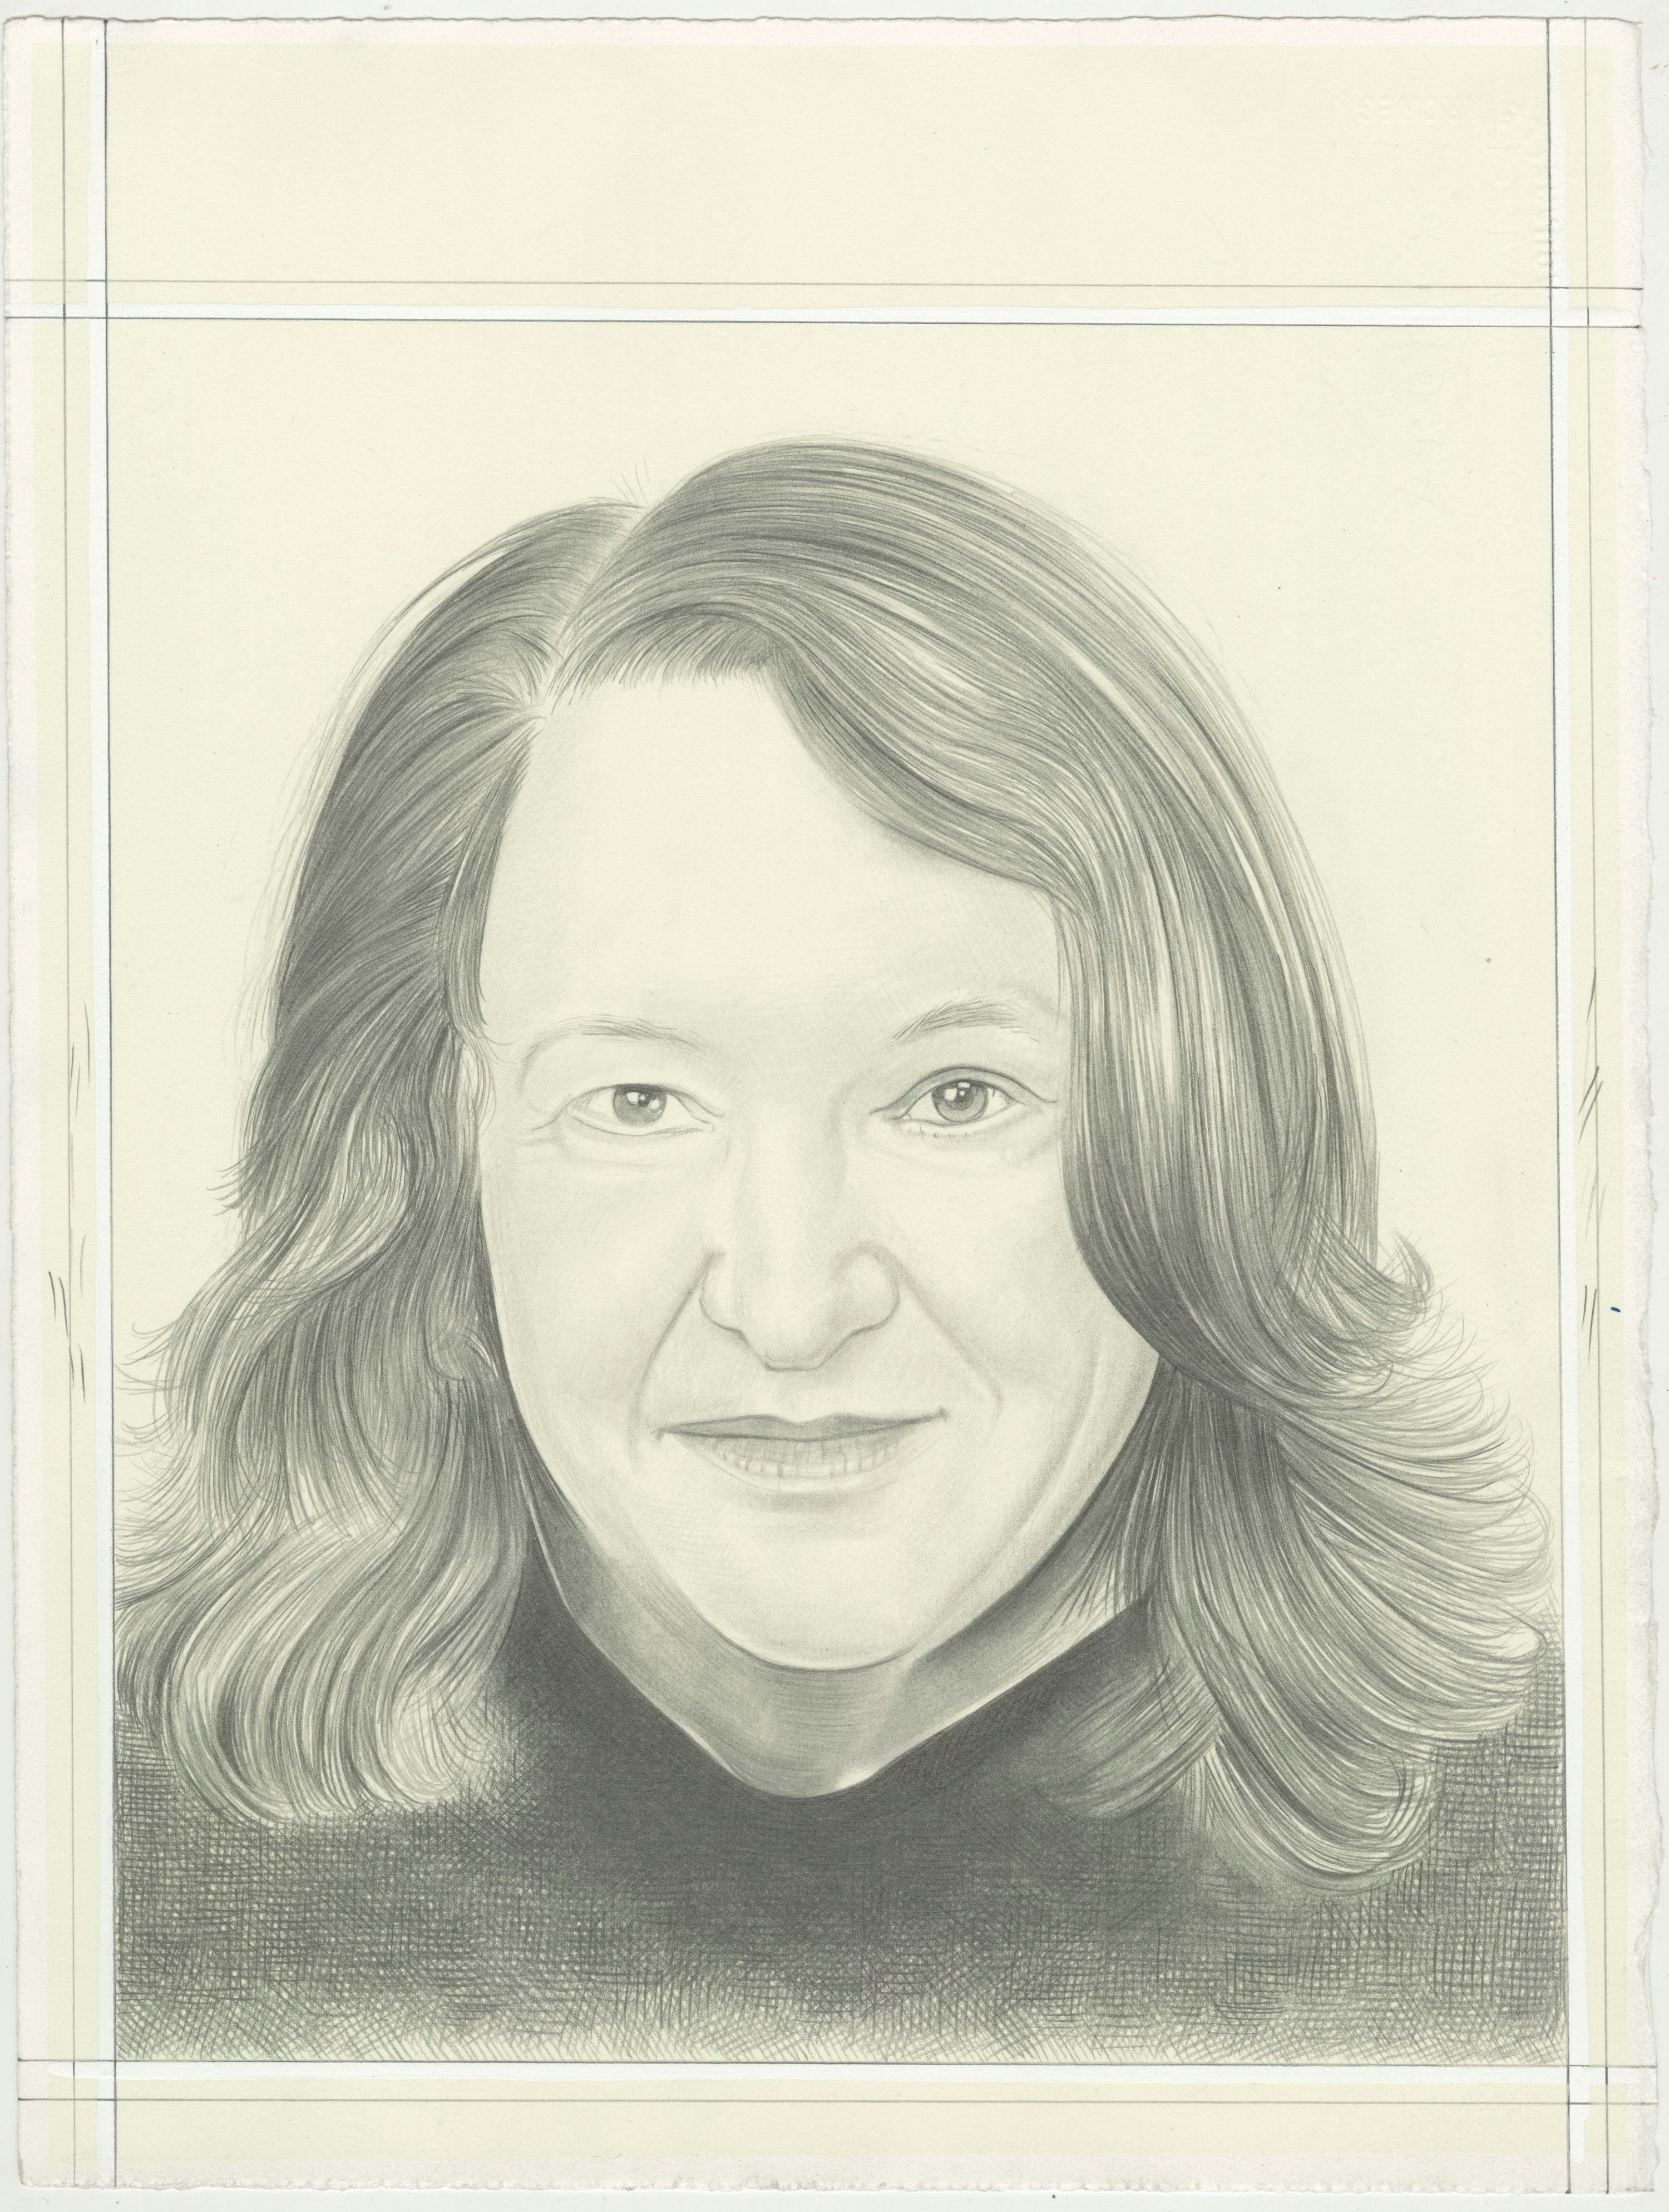 Portrait of Lynn Hershman Leeson, pencil on paper by Phong H. Bui.